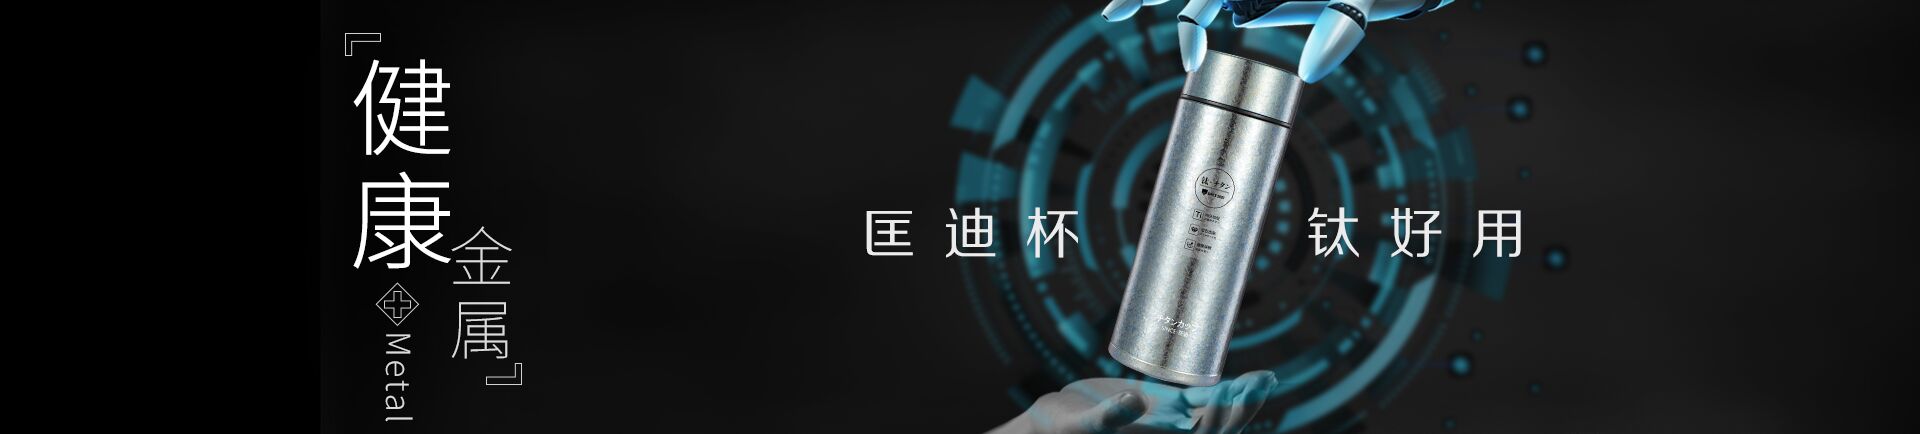 浙江匡迪工贸有限公司-Zhejiang kuangdi,kuangdi industry and trade - zhejiang kuangdi industry and trade - focus on the thermos cup, thermos kettle, glass research and manufacture of large-scale enterprises